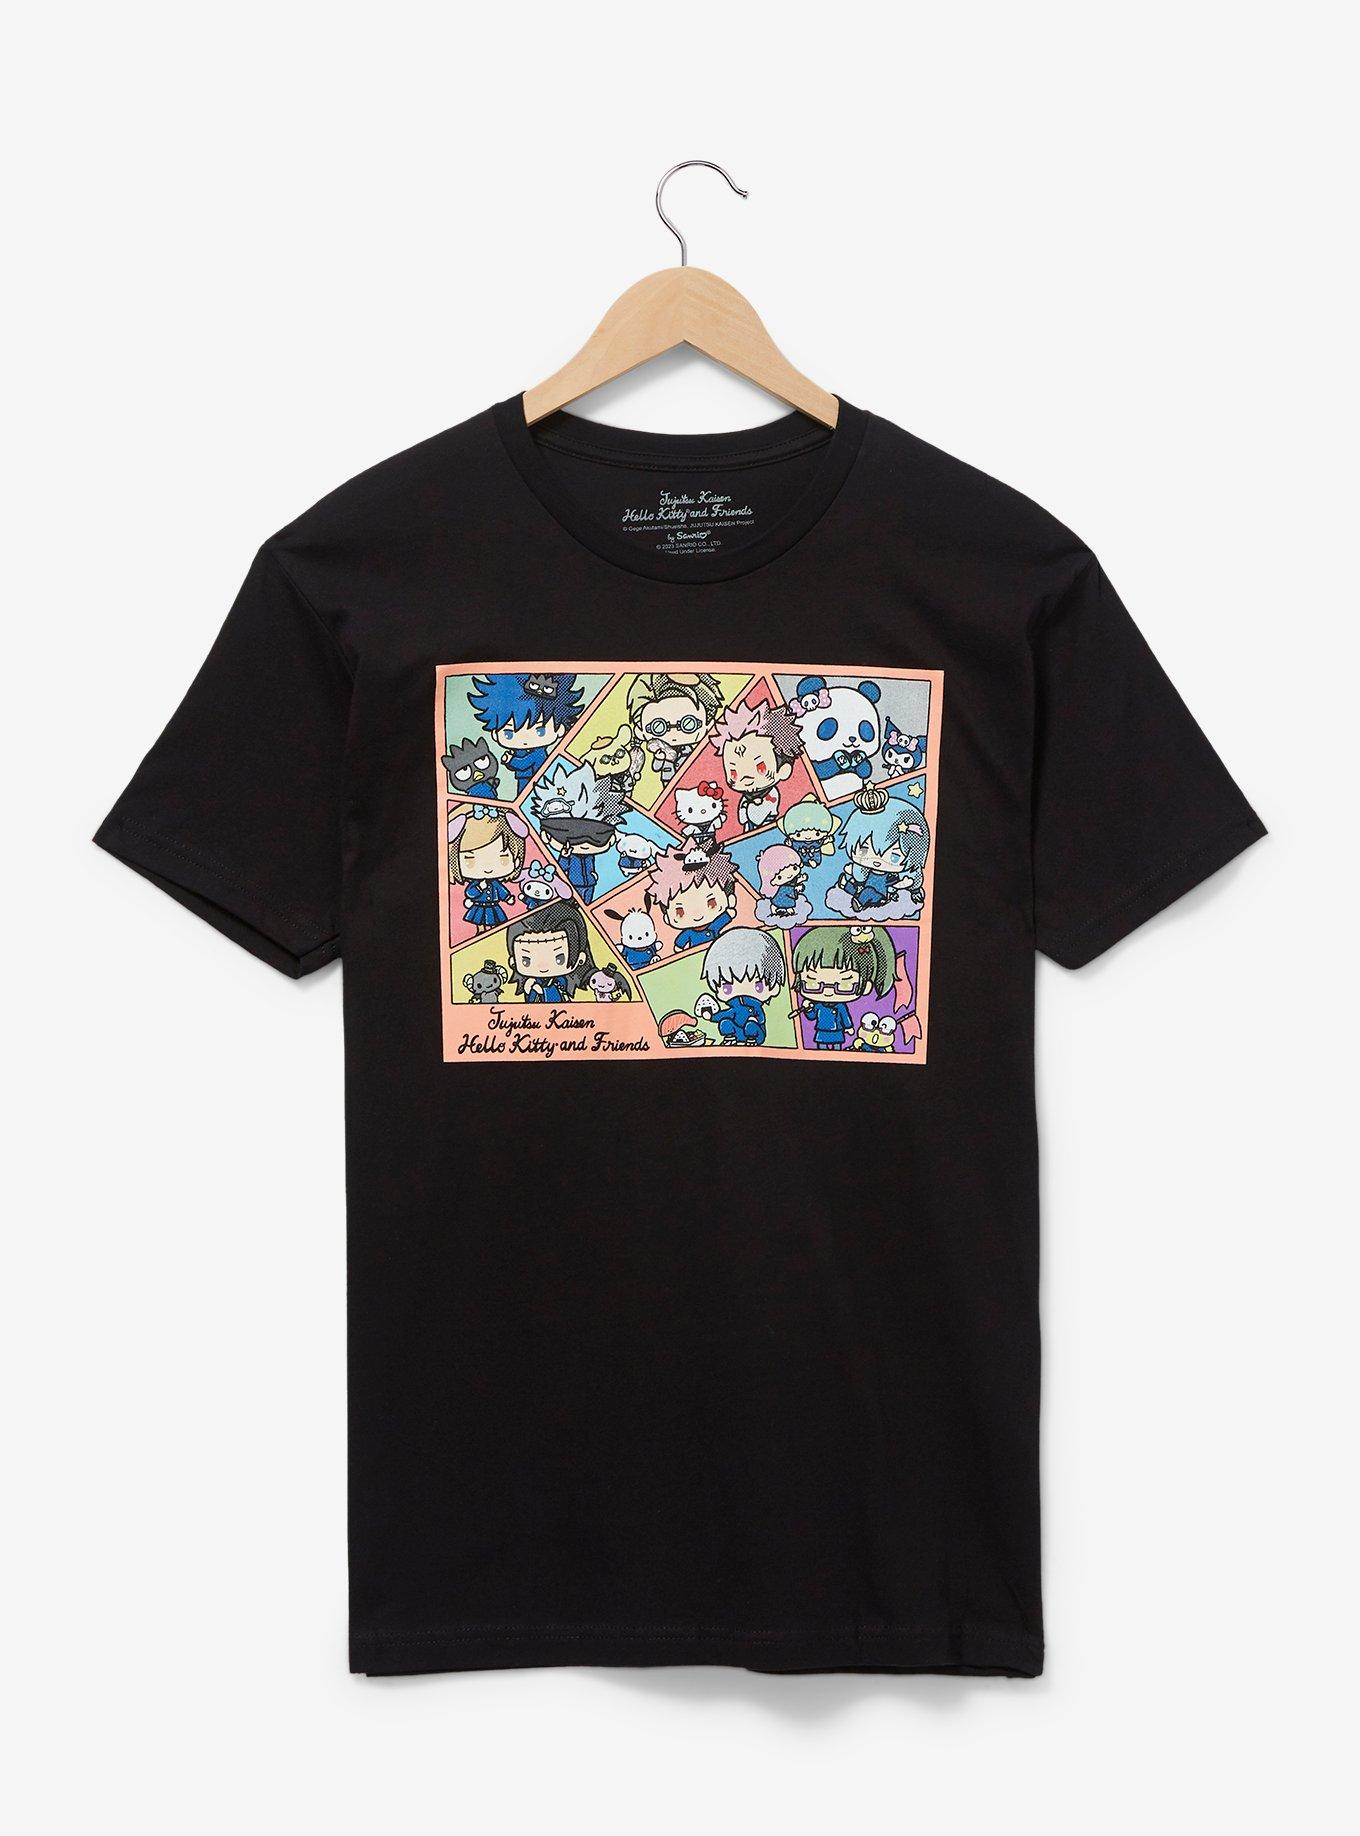 Jujutsu Kaisen x Hello Kitty and Friends Group Portrait T-Shirt ...